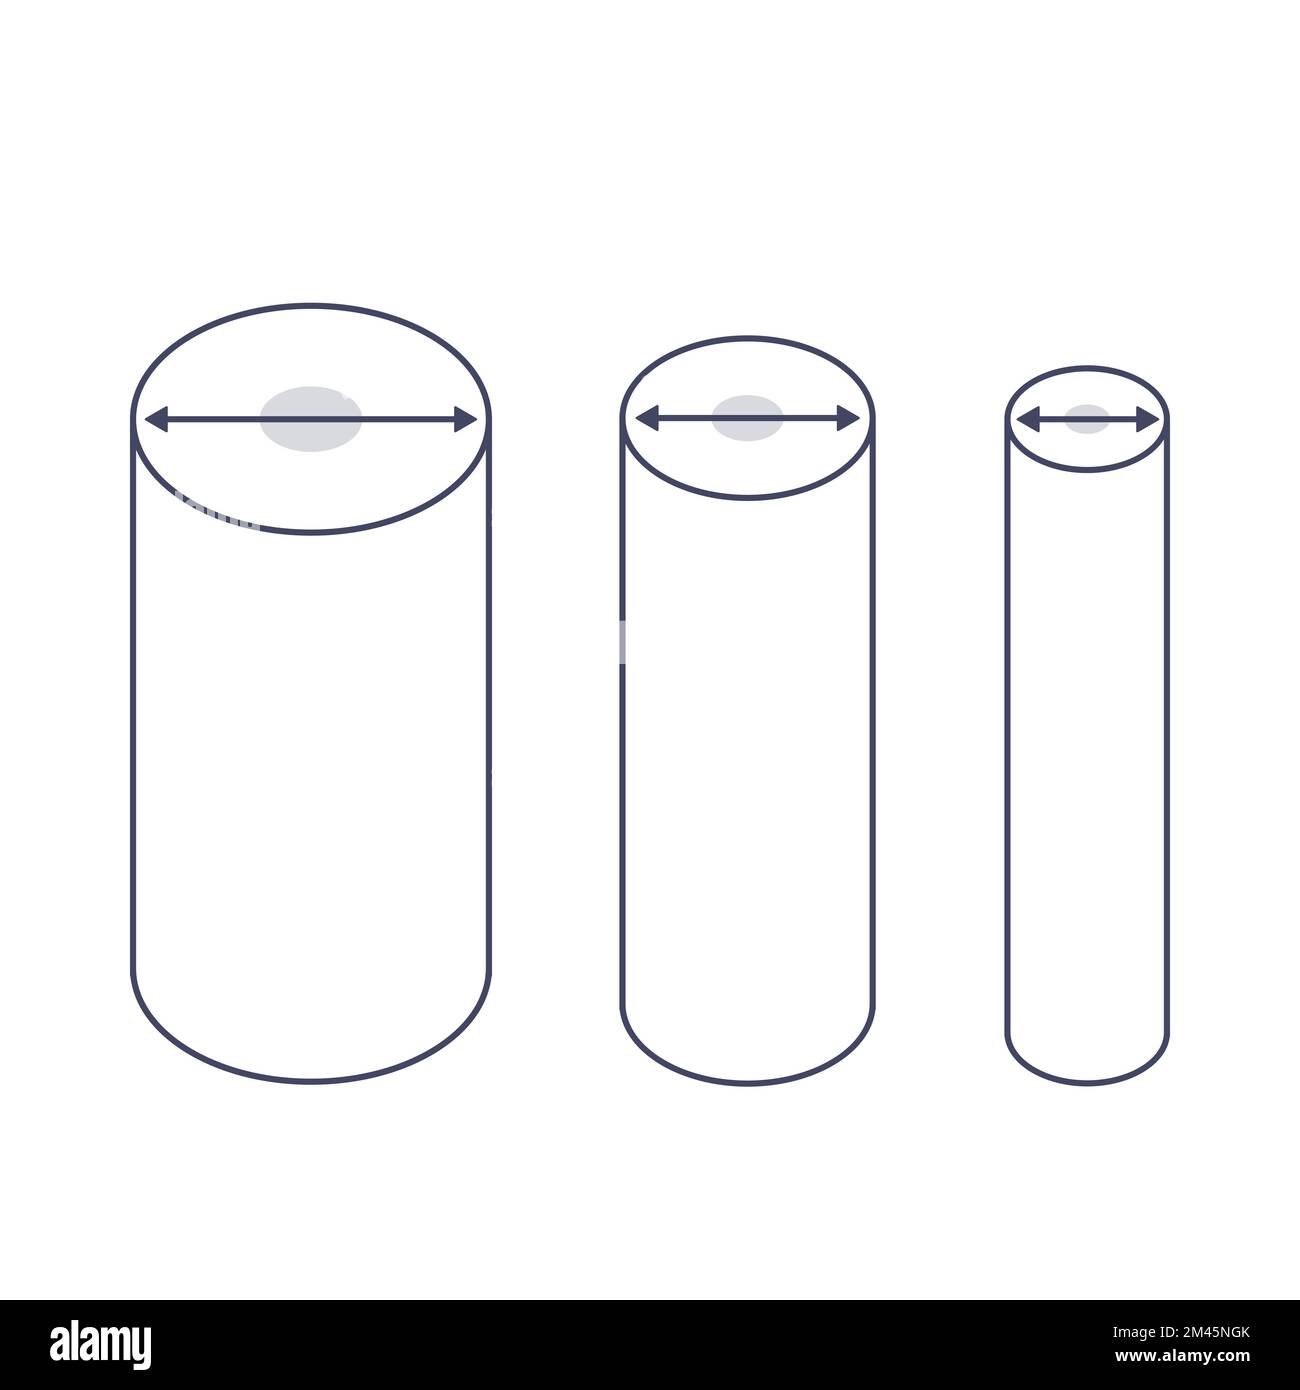 Cylinder pipe diameter geometric diagram icon set Stock Vector